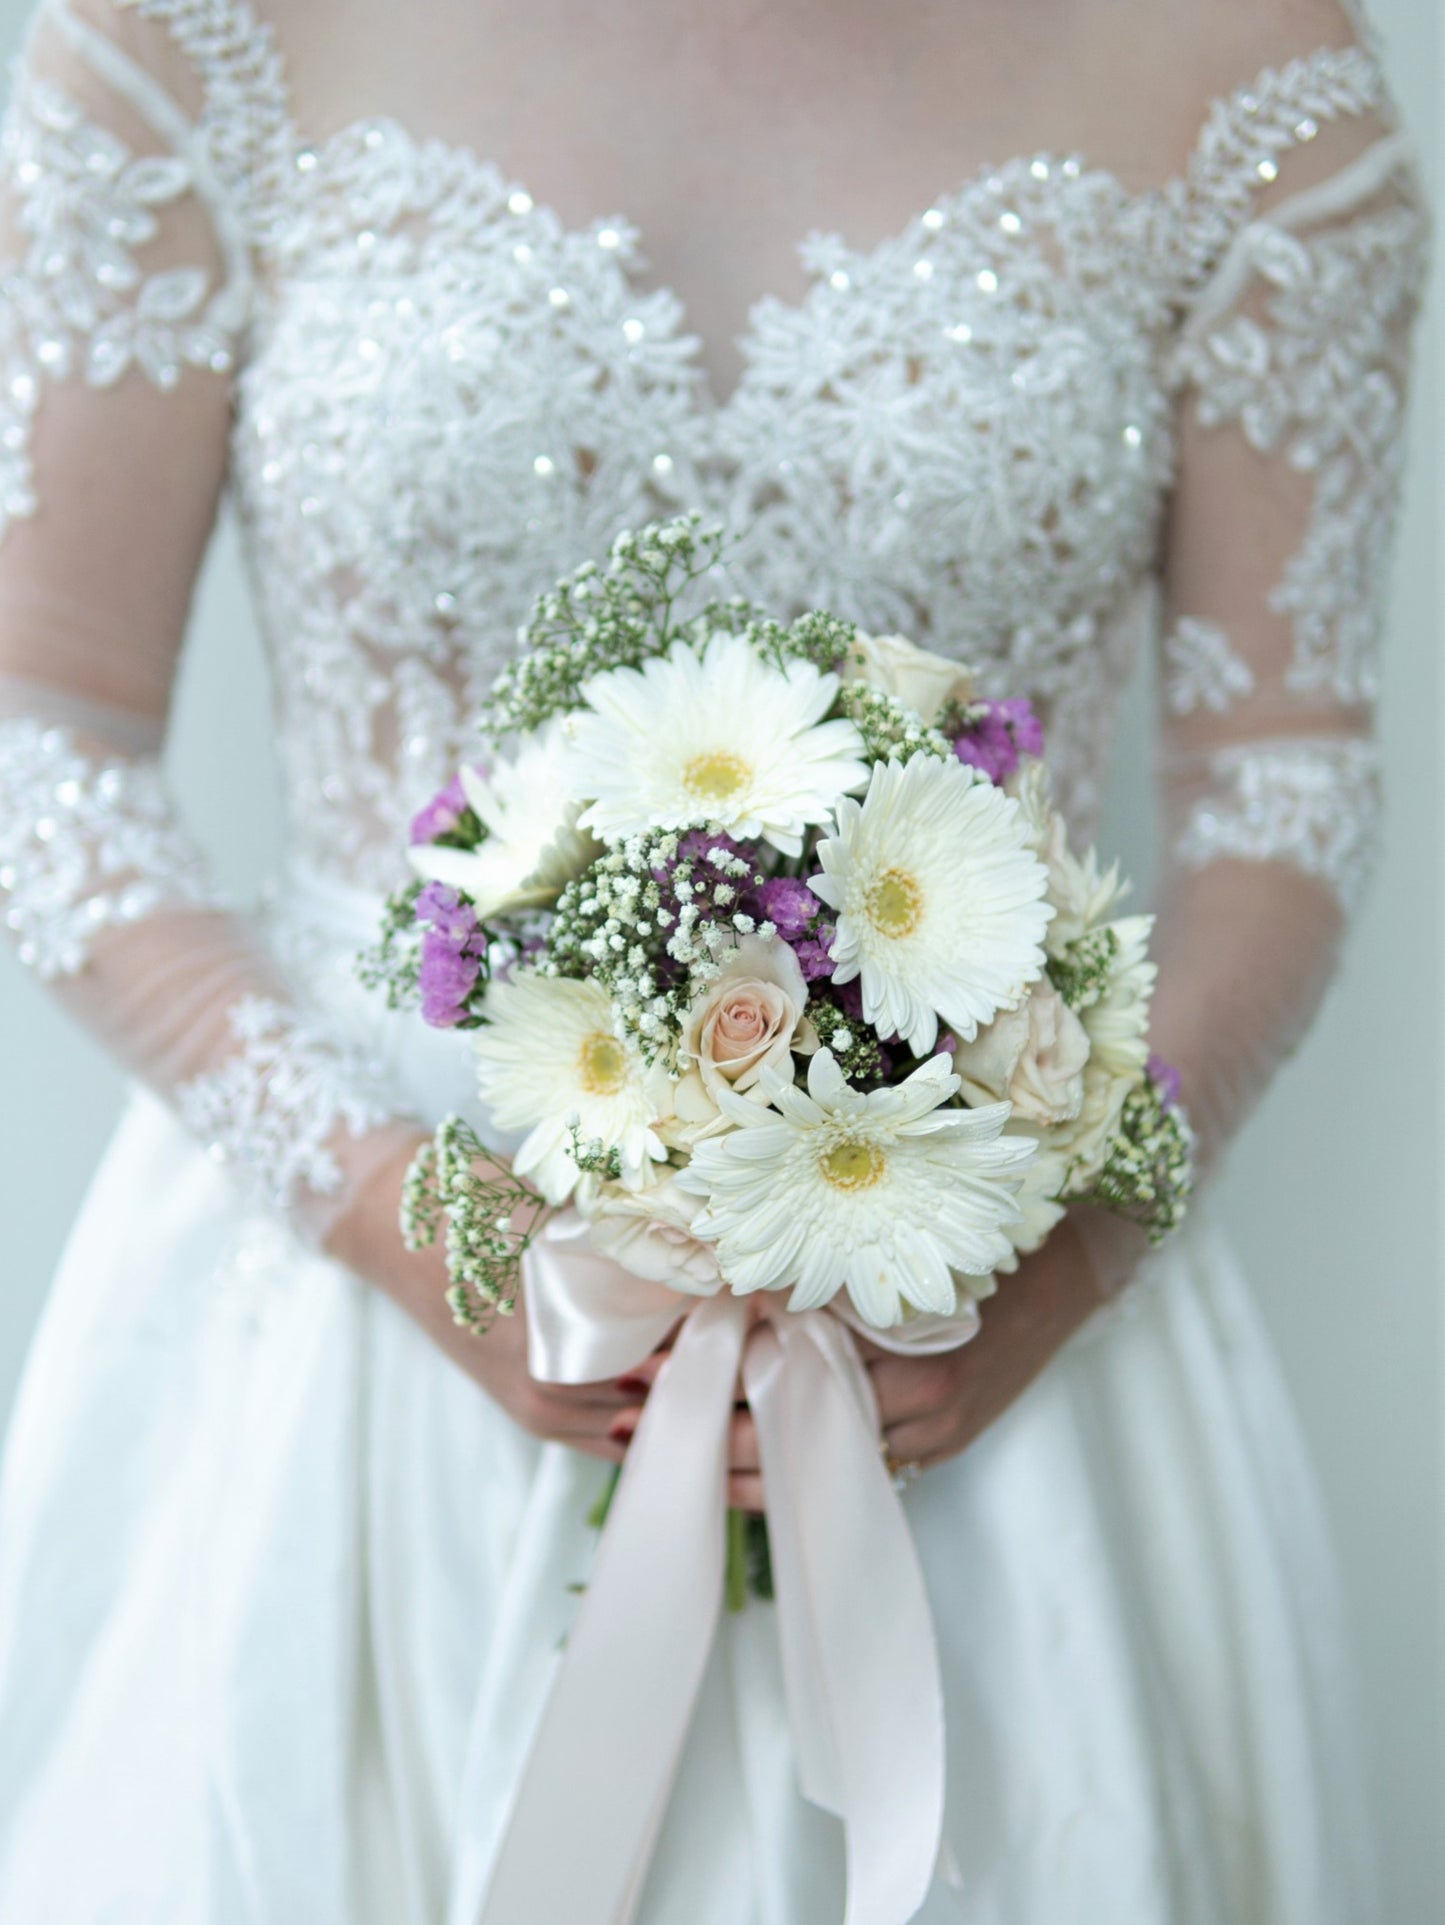 Danna Bridal Bouquet| Personalized Bridal Bouquet For ROM & Wedding